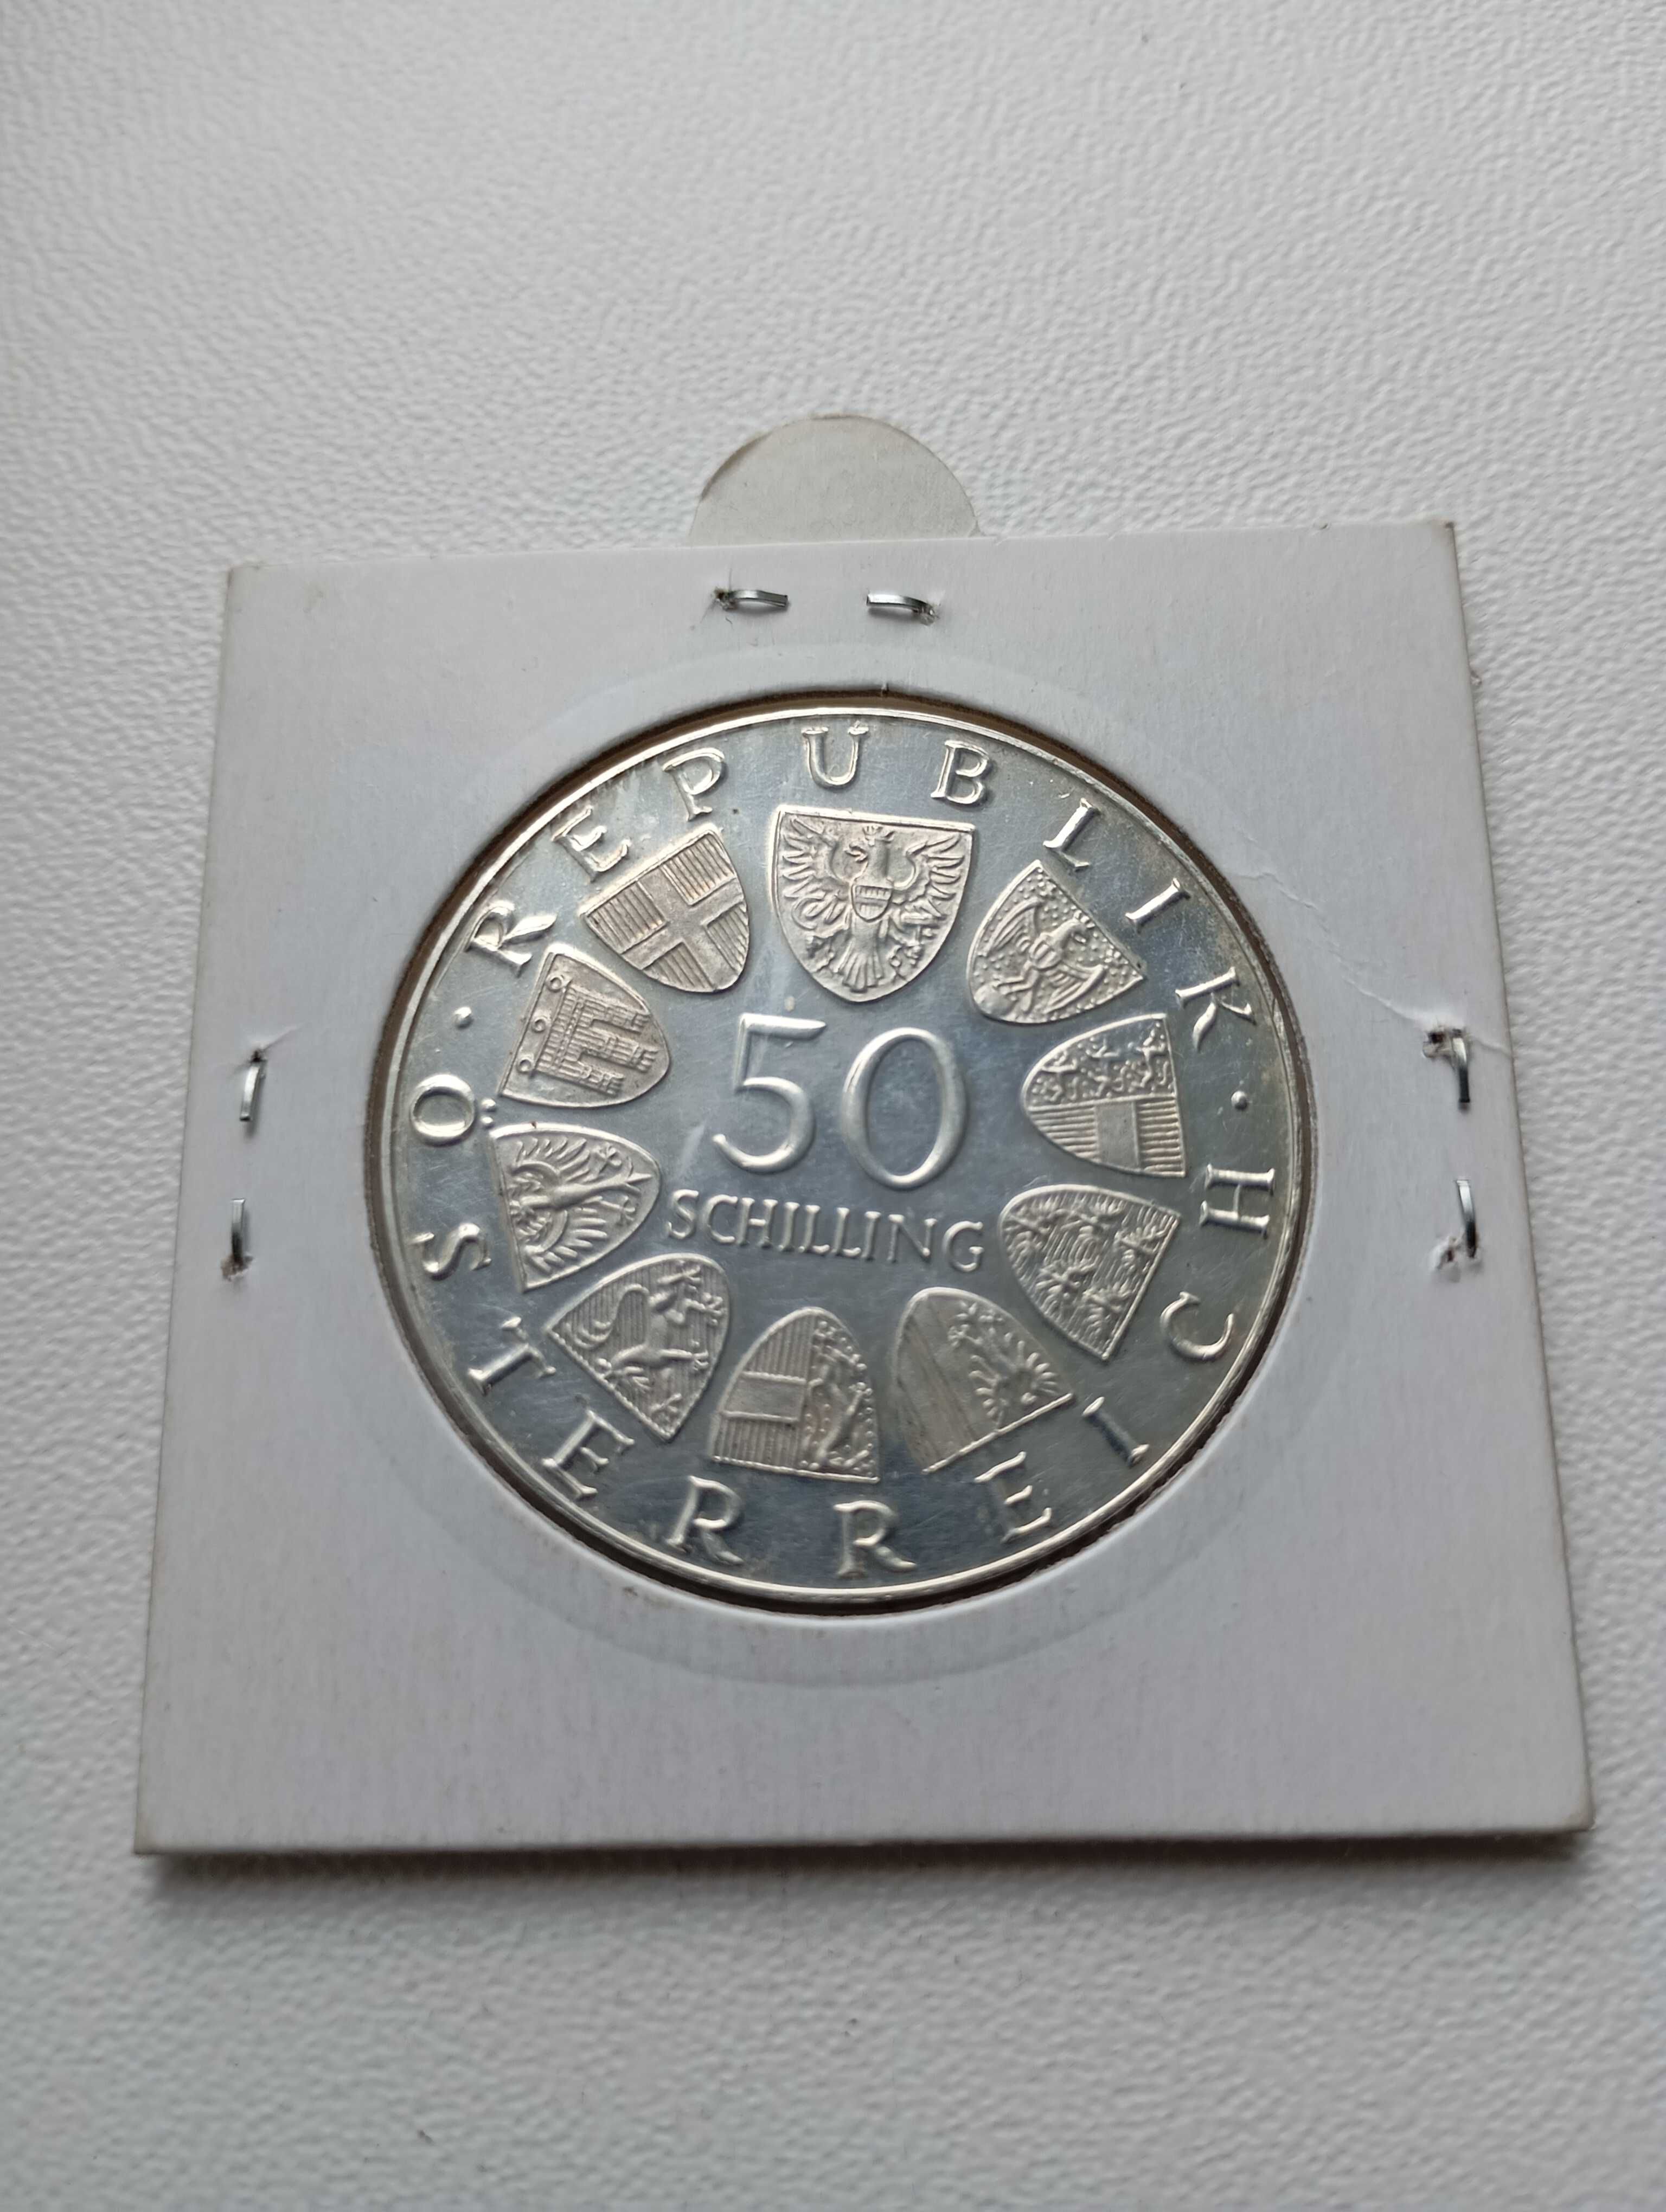 Австрия 50 шиллингов 1973 серебро 900-20г.